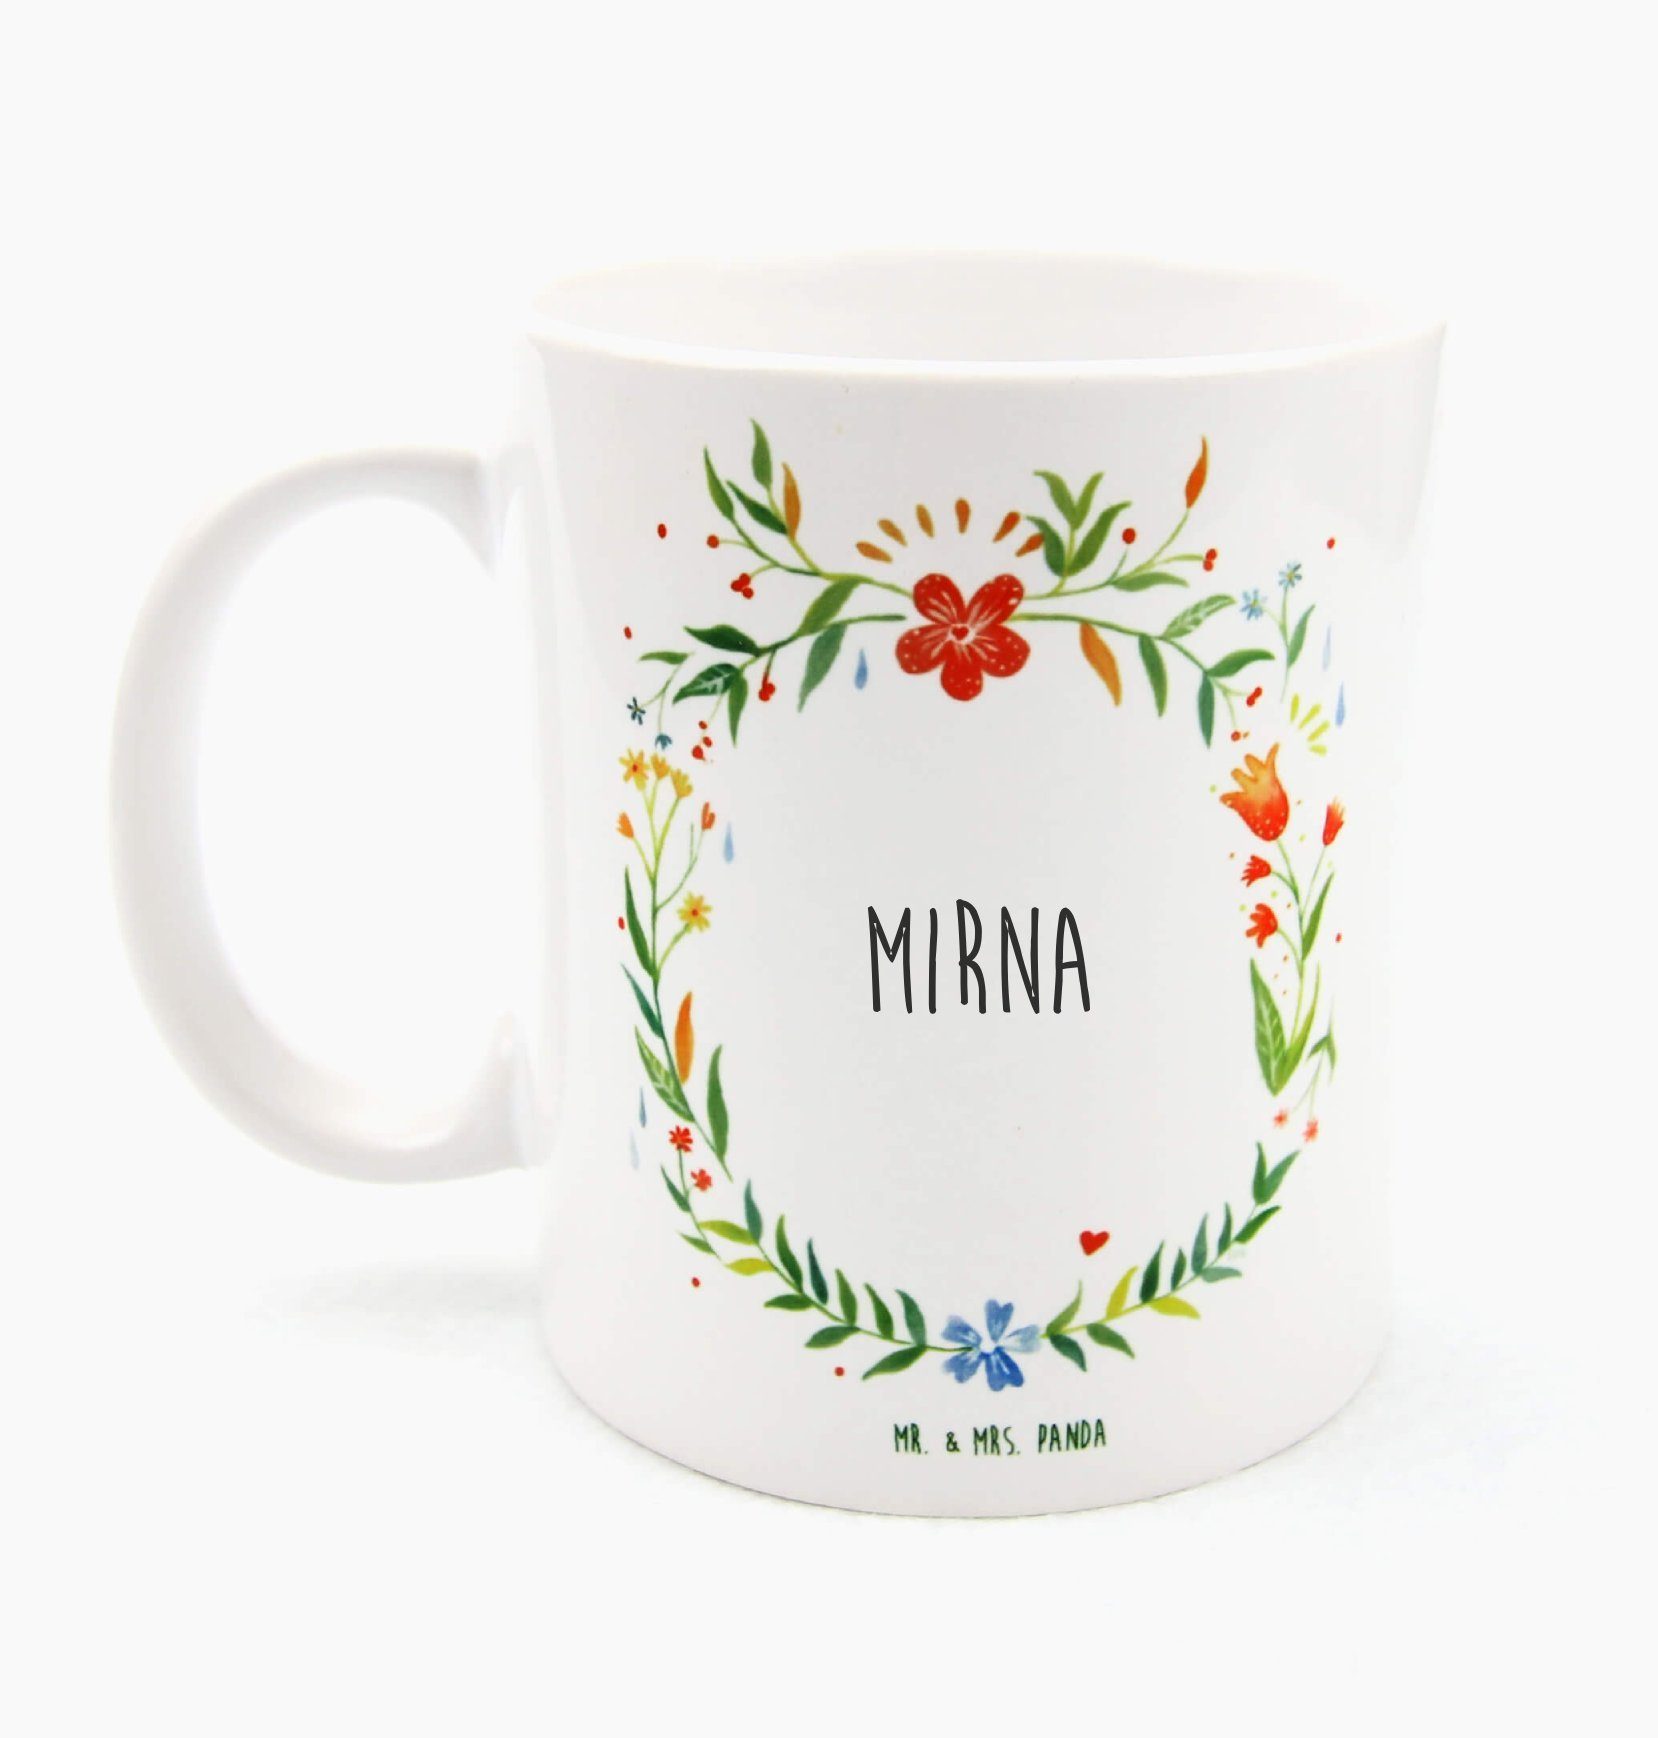 Mr. & Mrs. Panda Tasse Mirna - Geschenk, Teetasse, Büro Tasse, Geschenk Tasse, Tasse Sprüche, Keramik